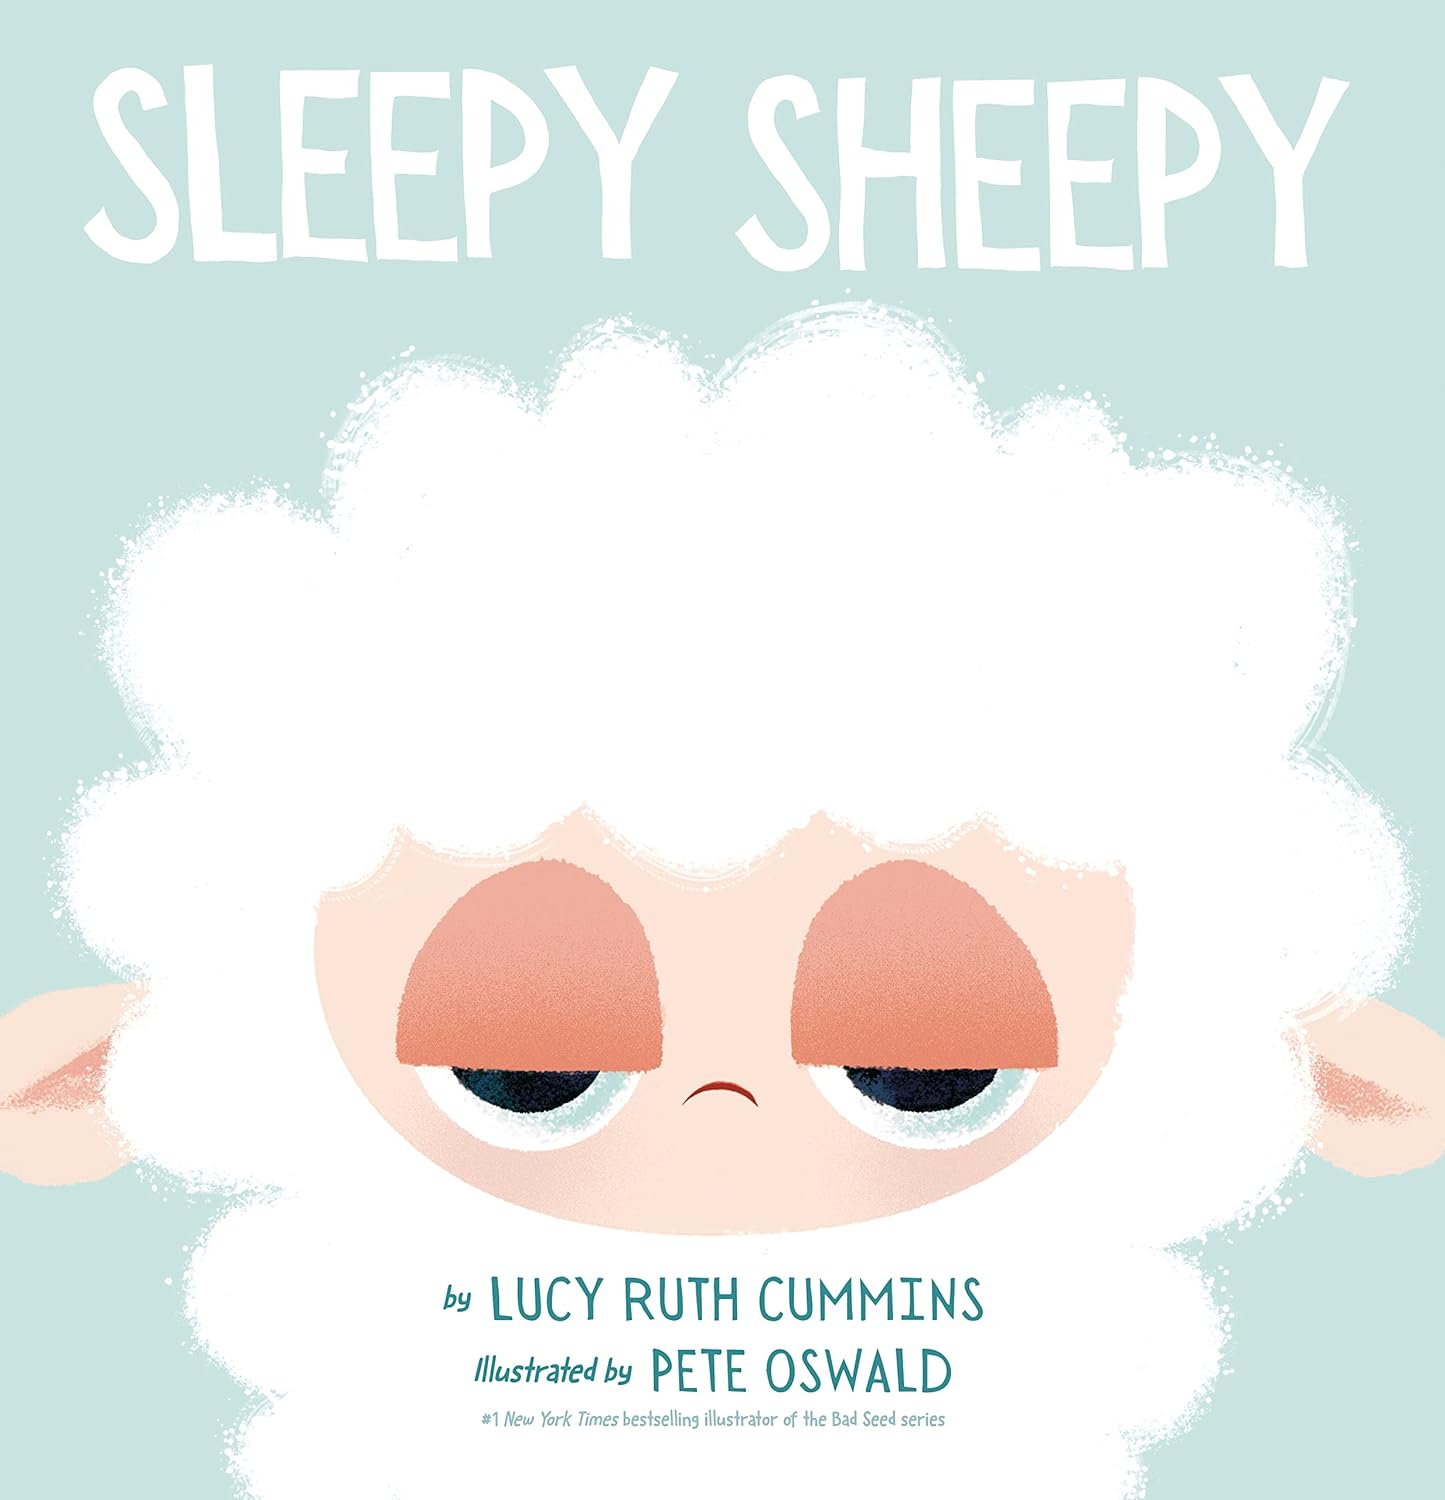 Sleepy Sheepy Hardcover Picture Book - Twinkle Twinkle Little One